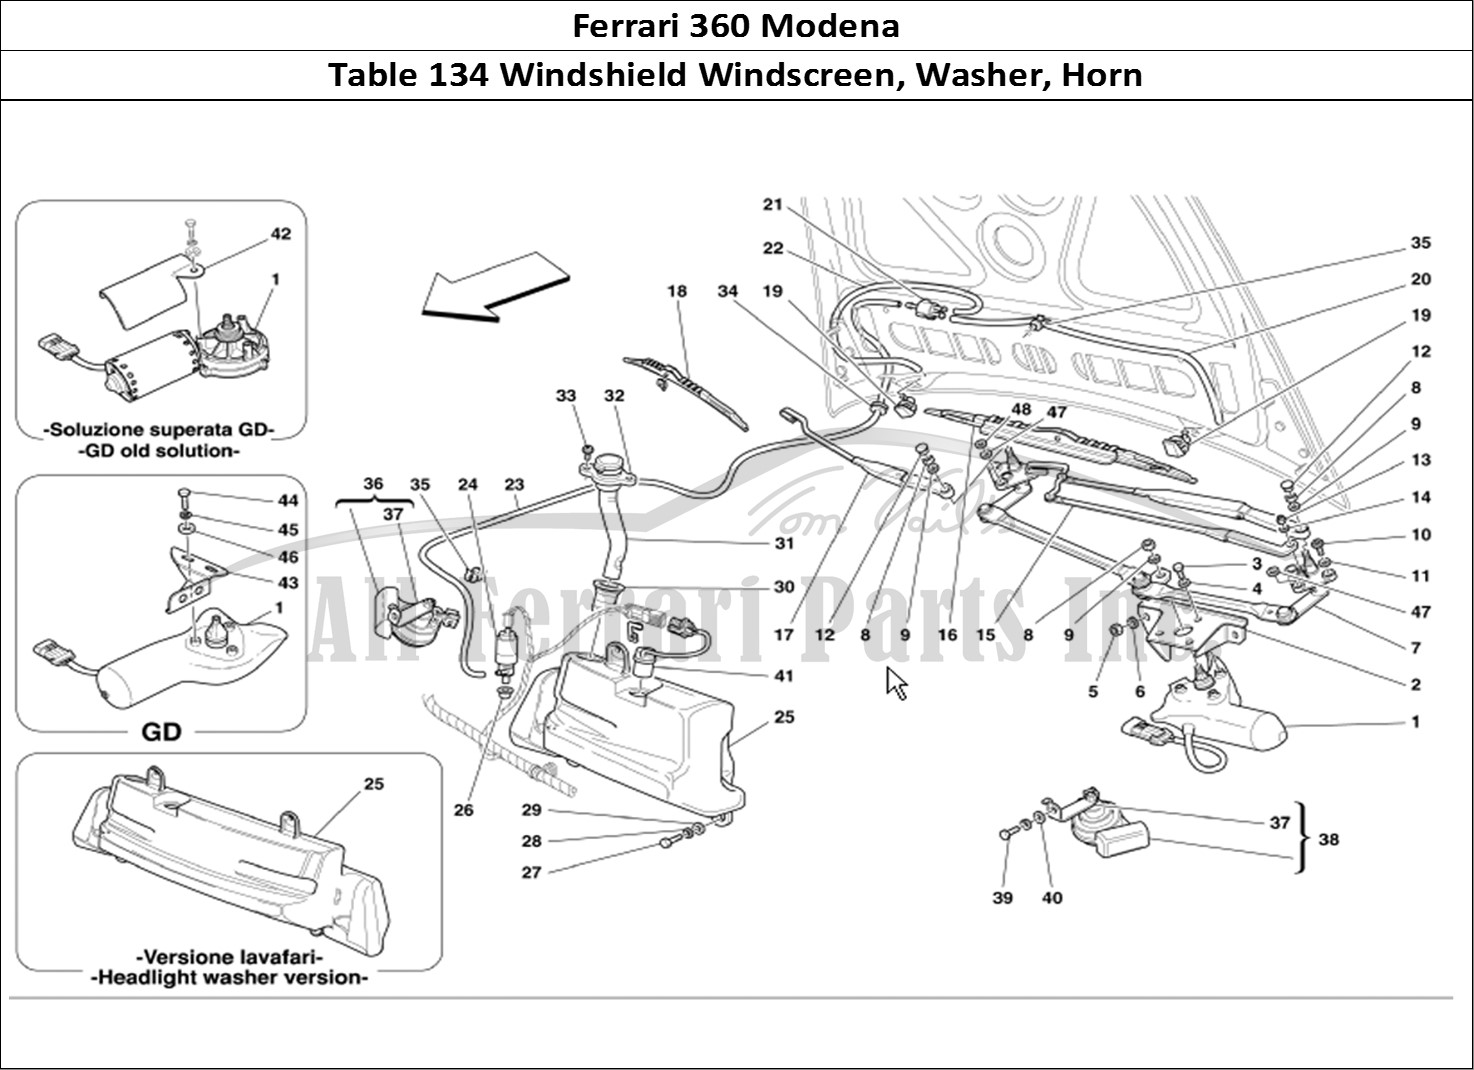 Ferrari Parts Ferrari 360 Modena Page 134 Windshield, Glass Washer